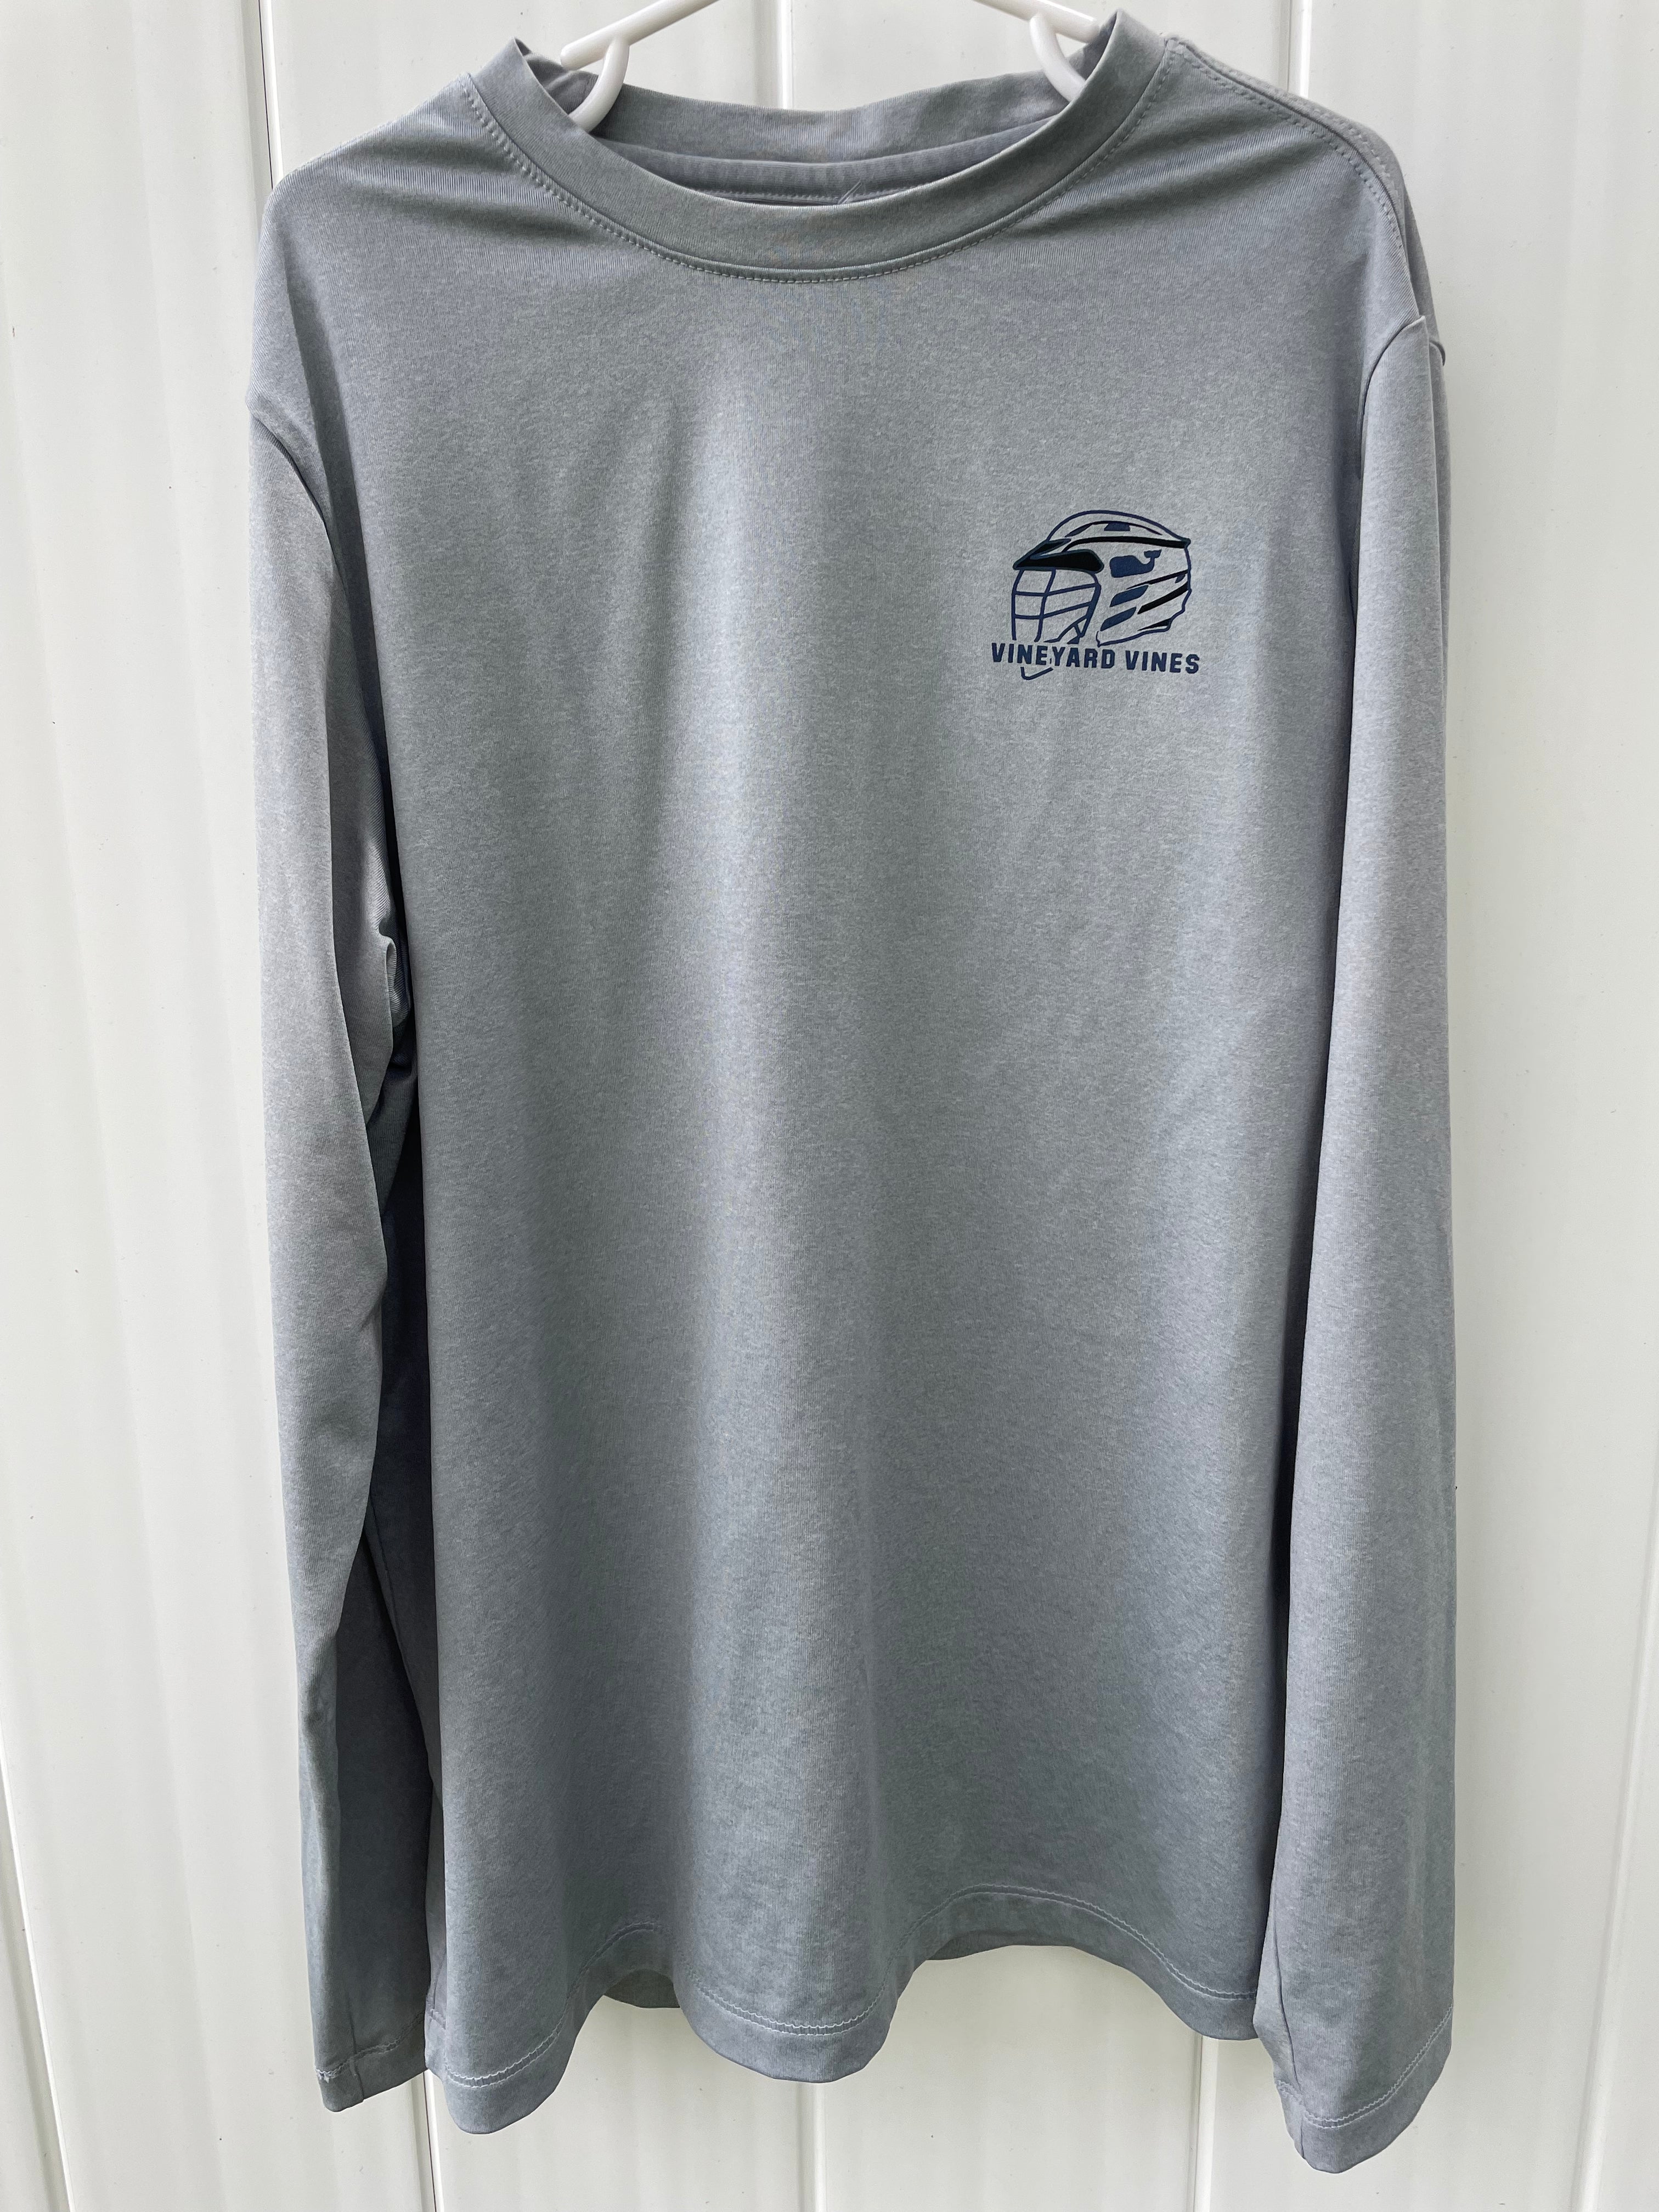 Vineyard Vines Lax Performance Shirt, Gray Boys Size S (8/10)